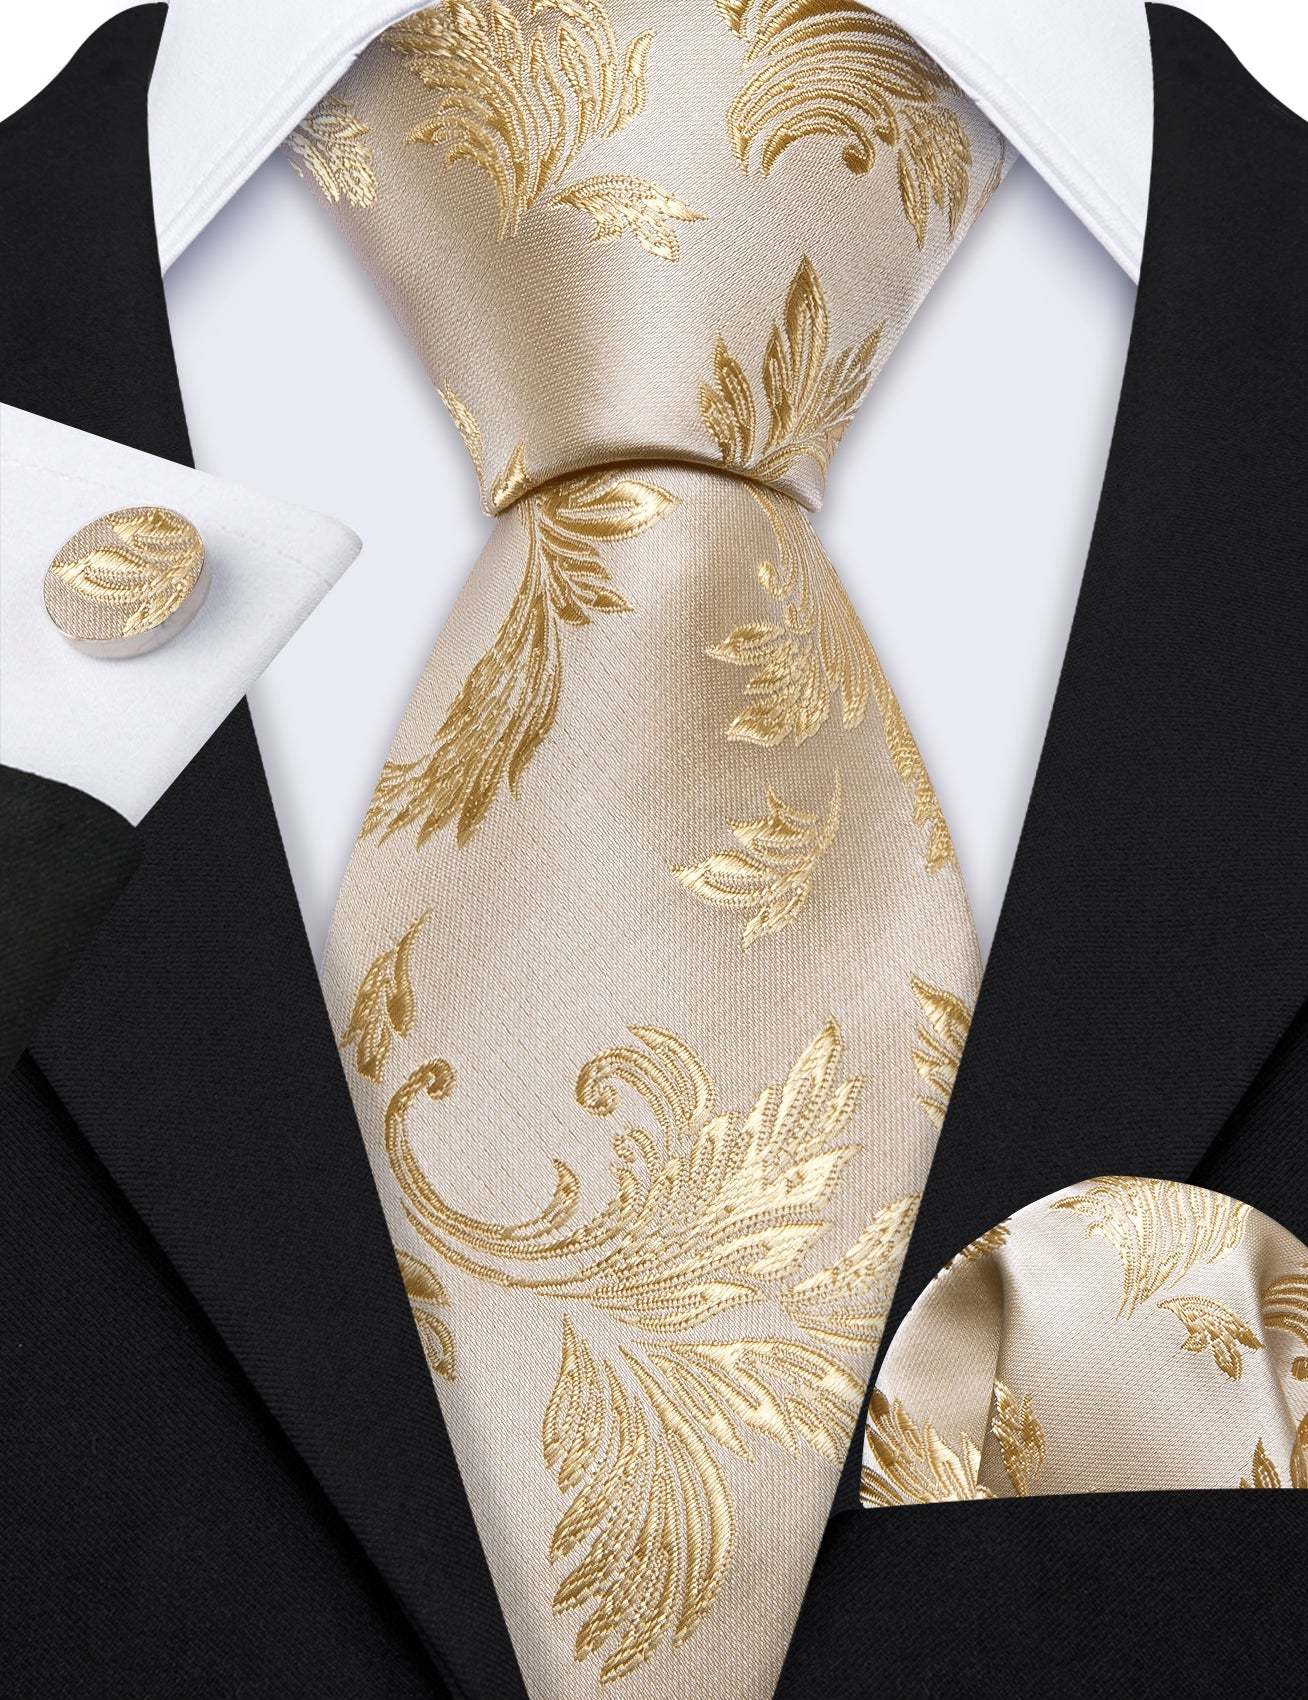 Linen Floral Silk Tie Handkerchief Cufflinks Set